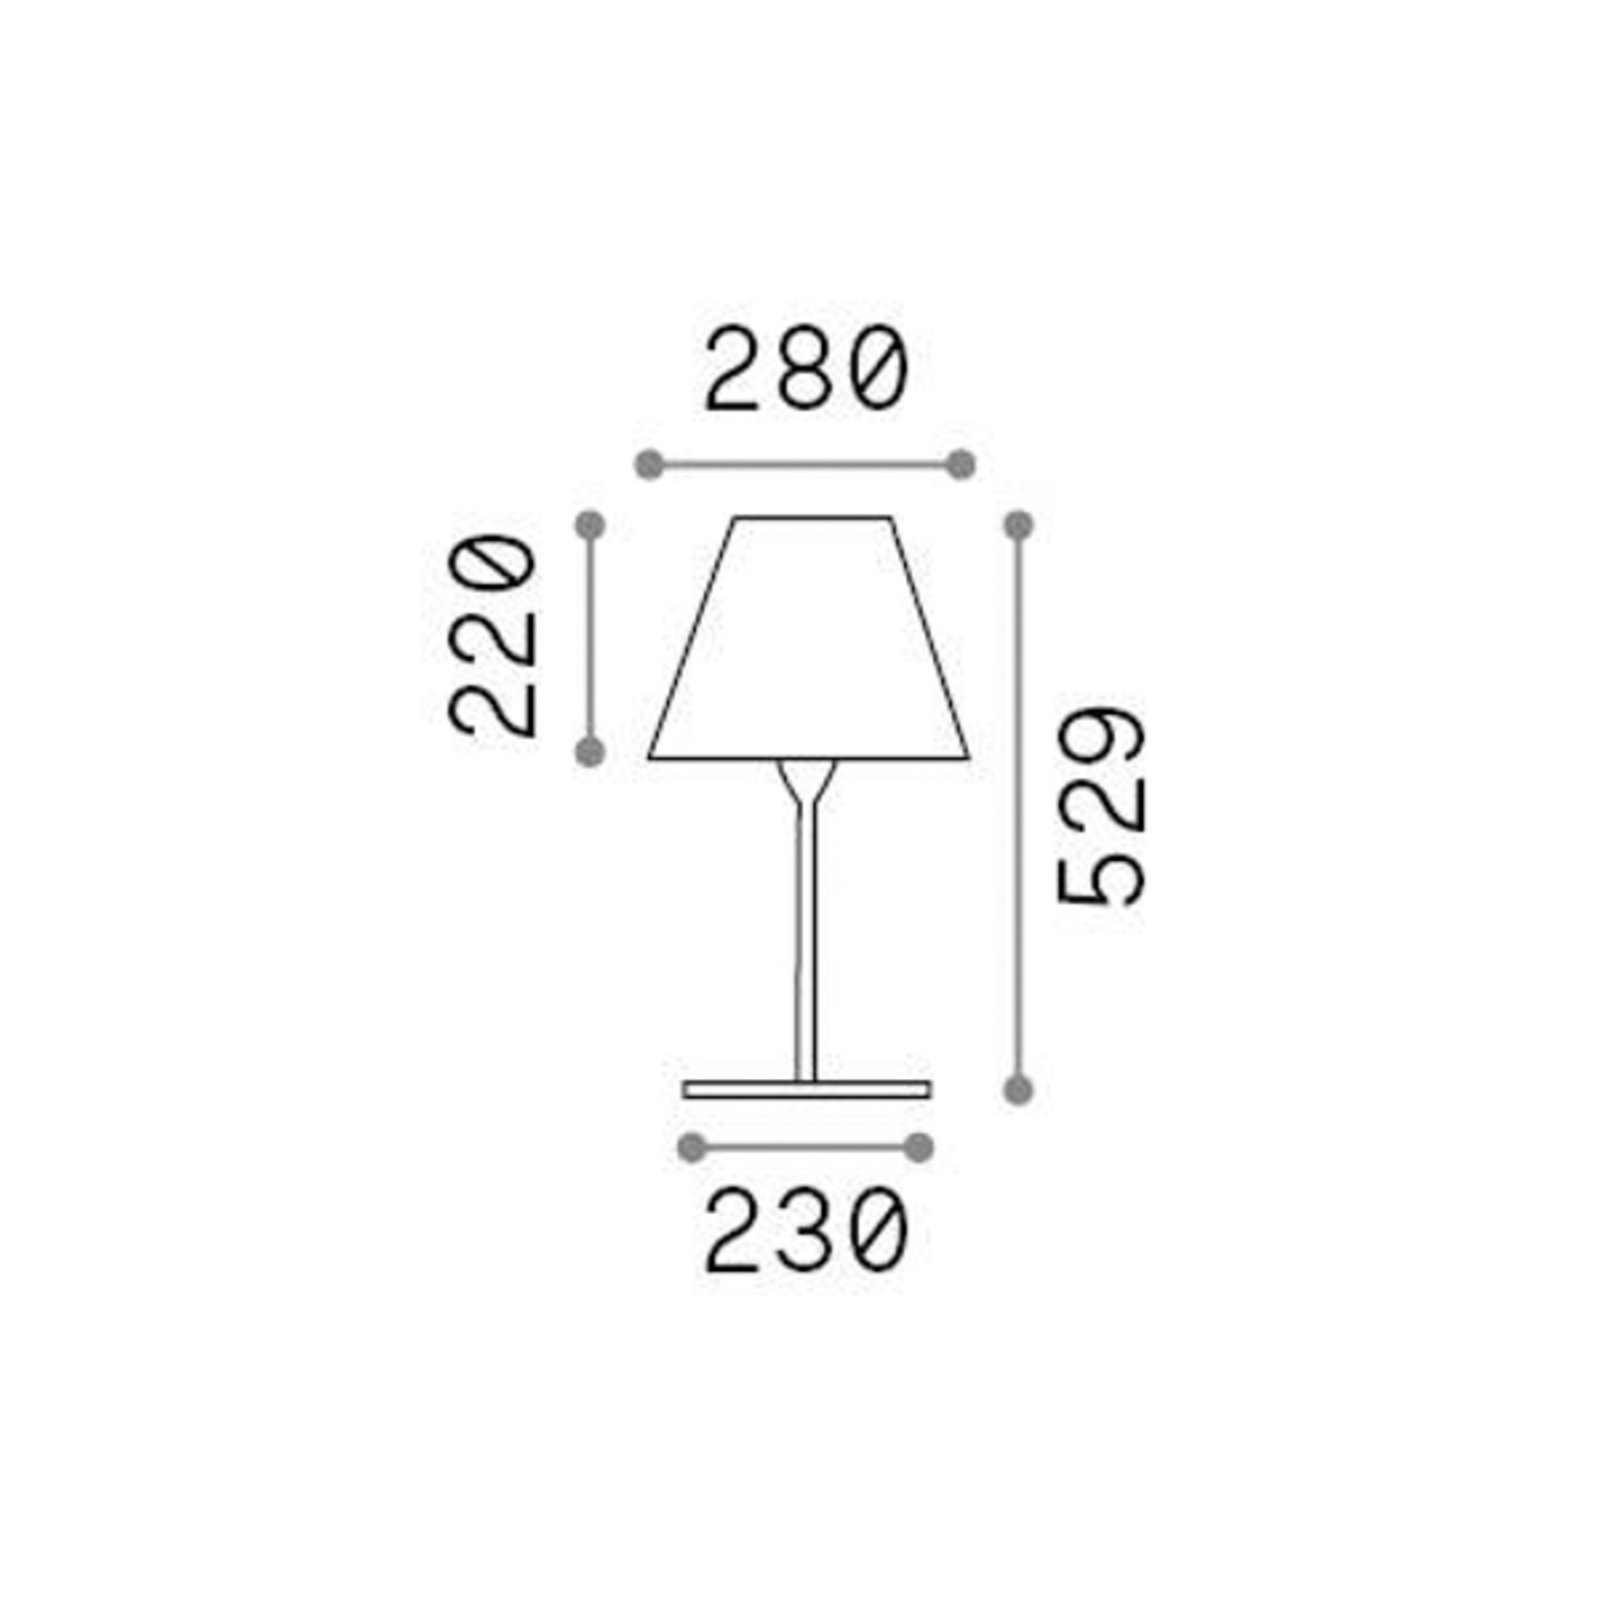 Ideal Lux Arcadia bordslampa för utomhusbruk, antracit, höjd 53 cm